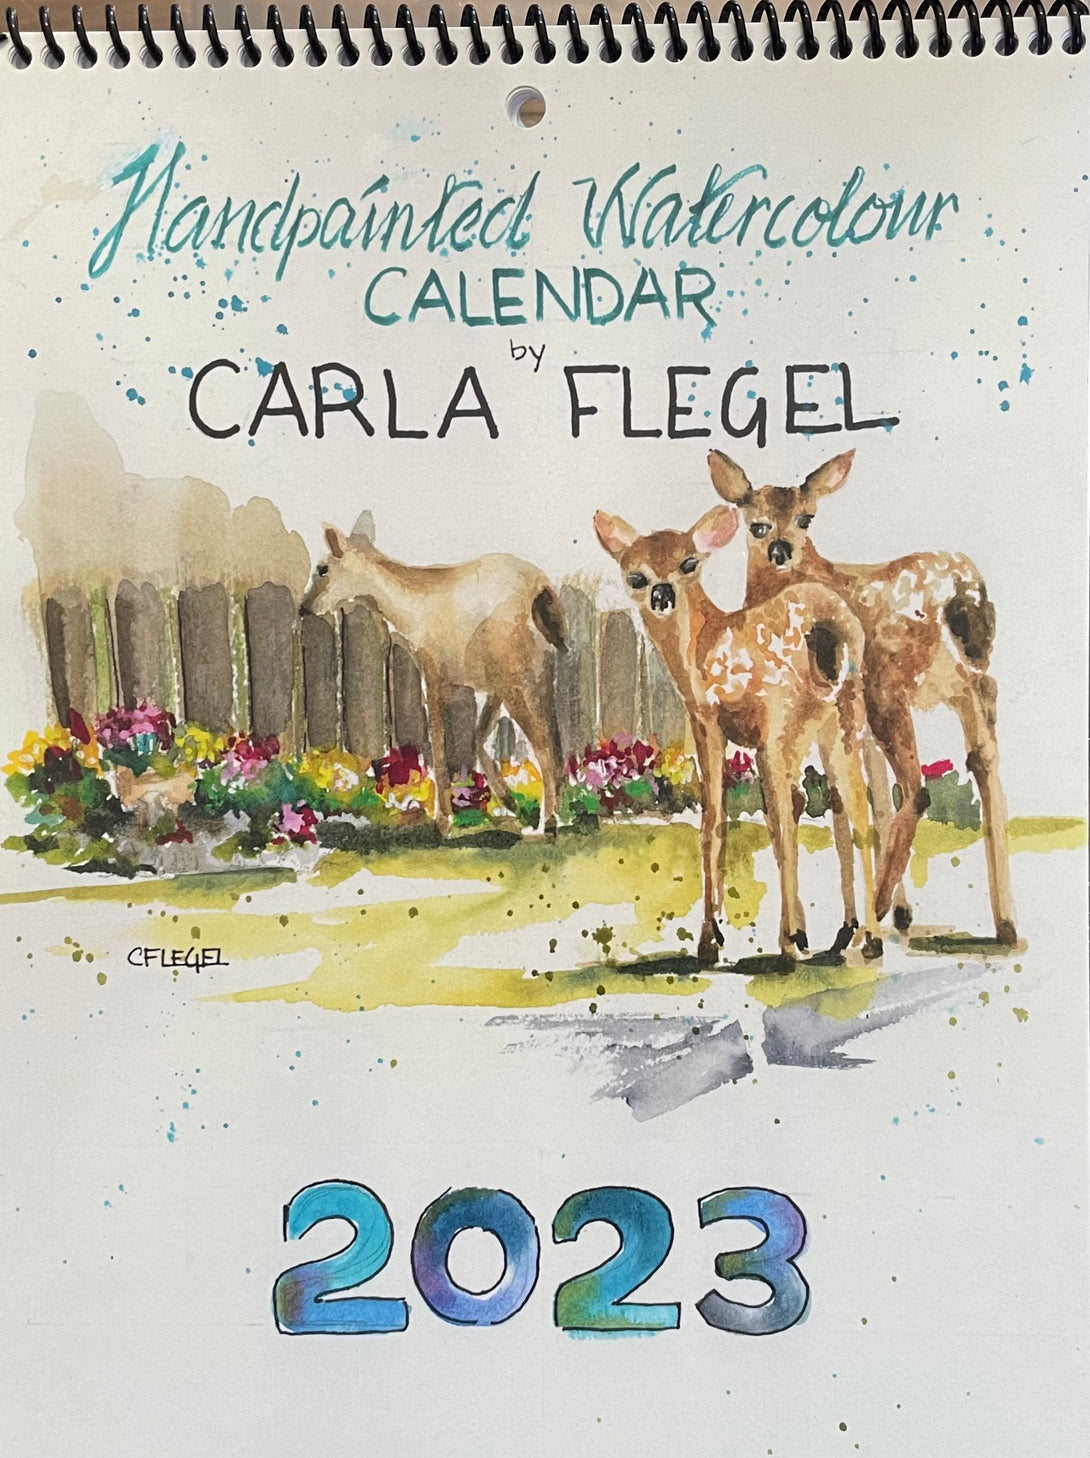 Carla Flegel - Calendar 2023 - hand painted watercolour by Carla Flegel - McMillan Arts Centre - Vancouver Island Art Gallery